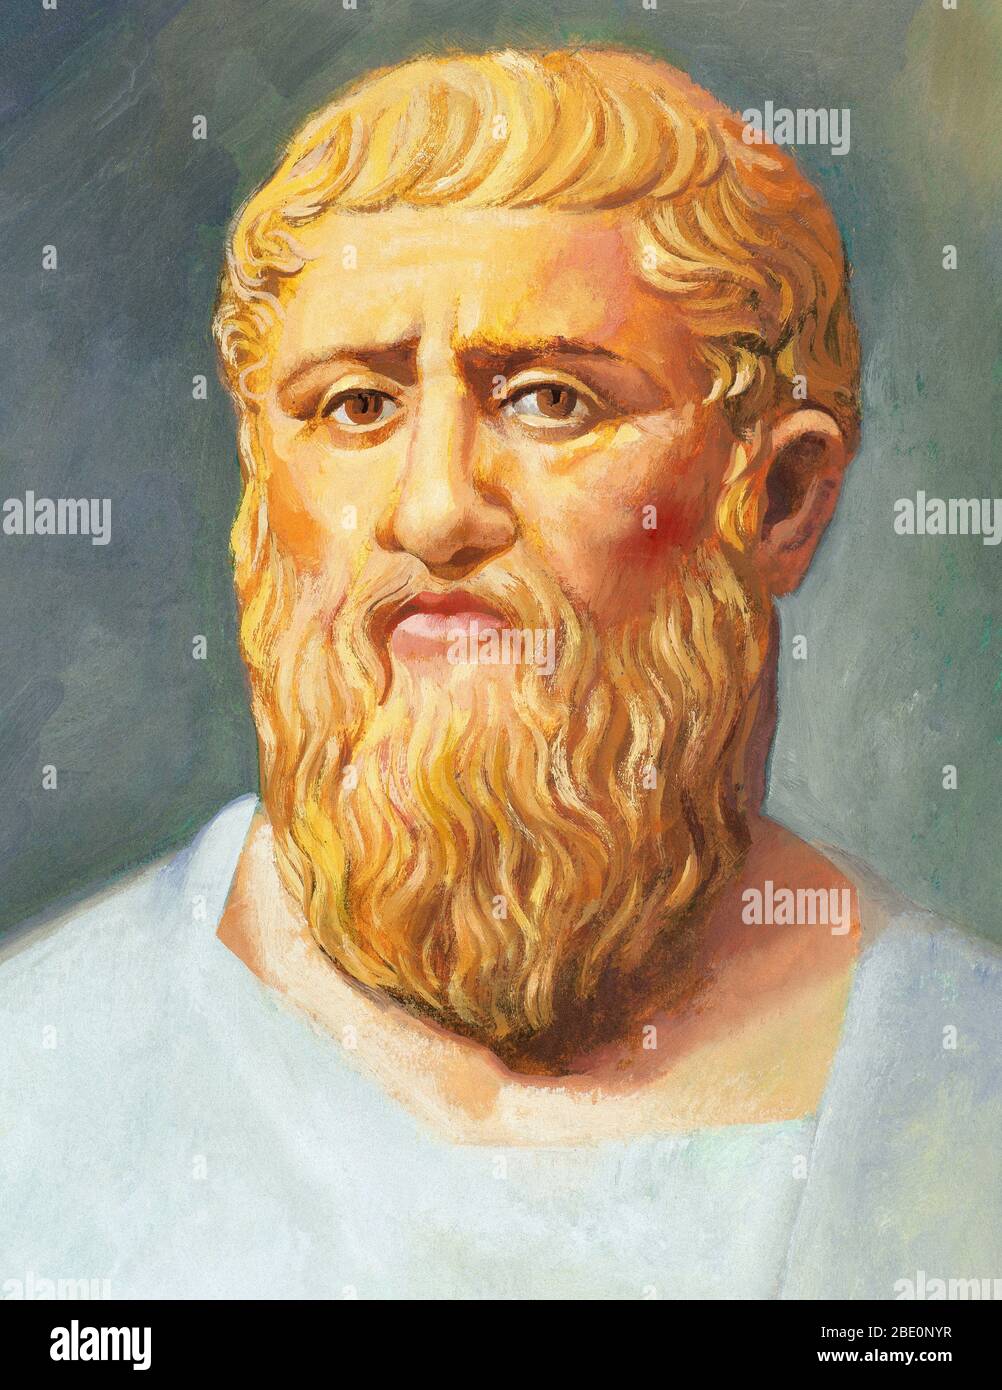 Plato. Stock Photo